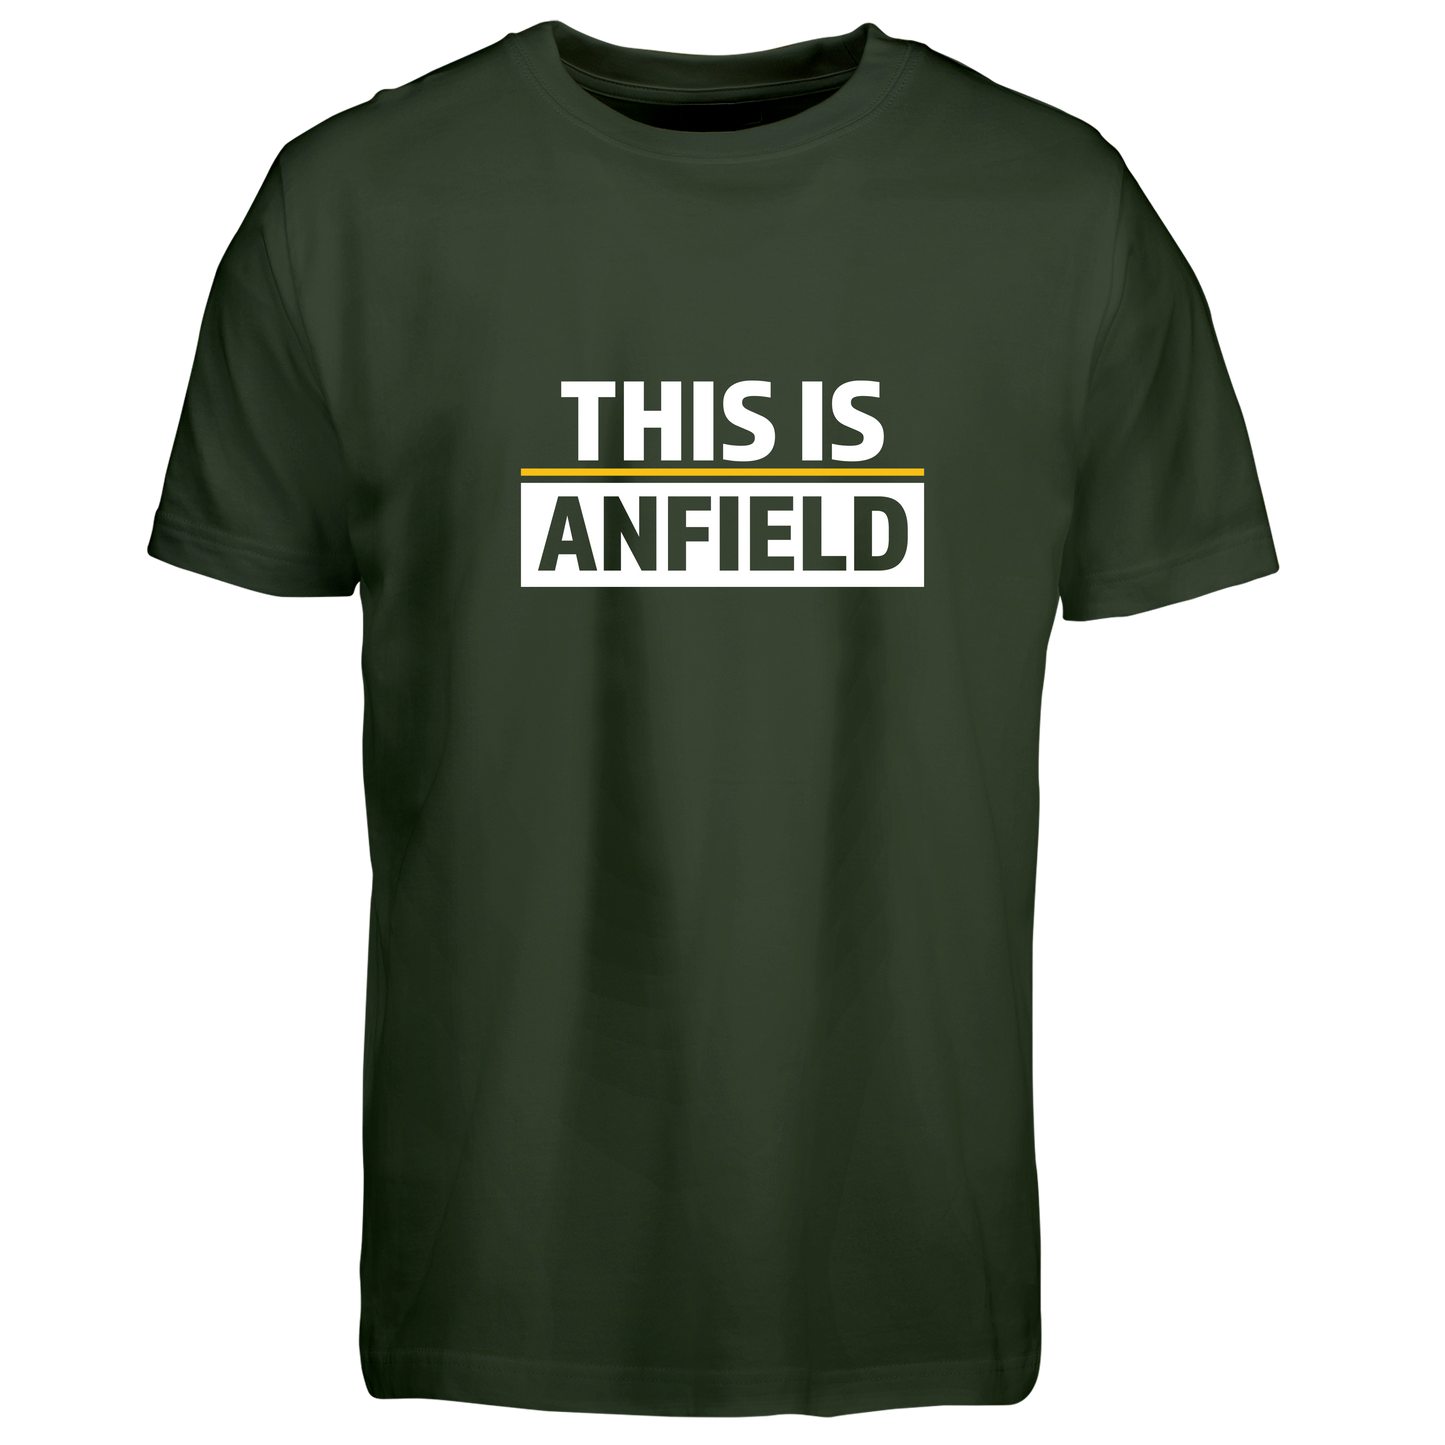 This is anfield- t-shirt - Børn